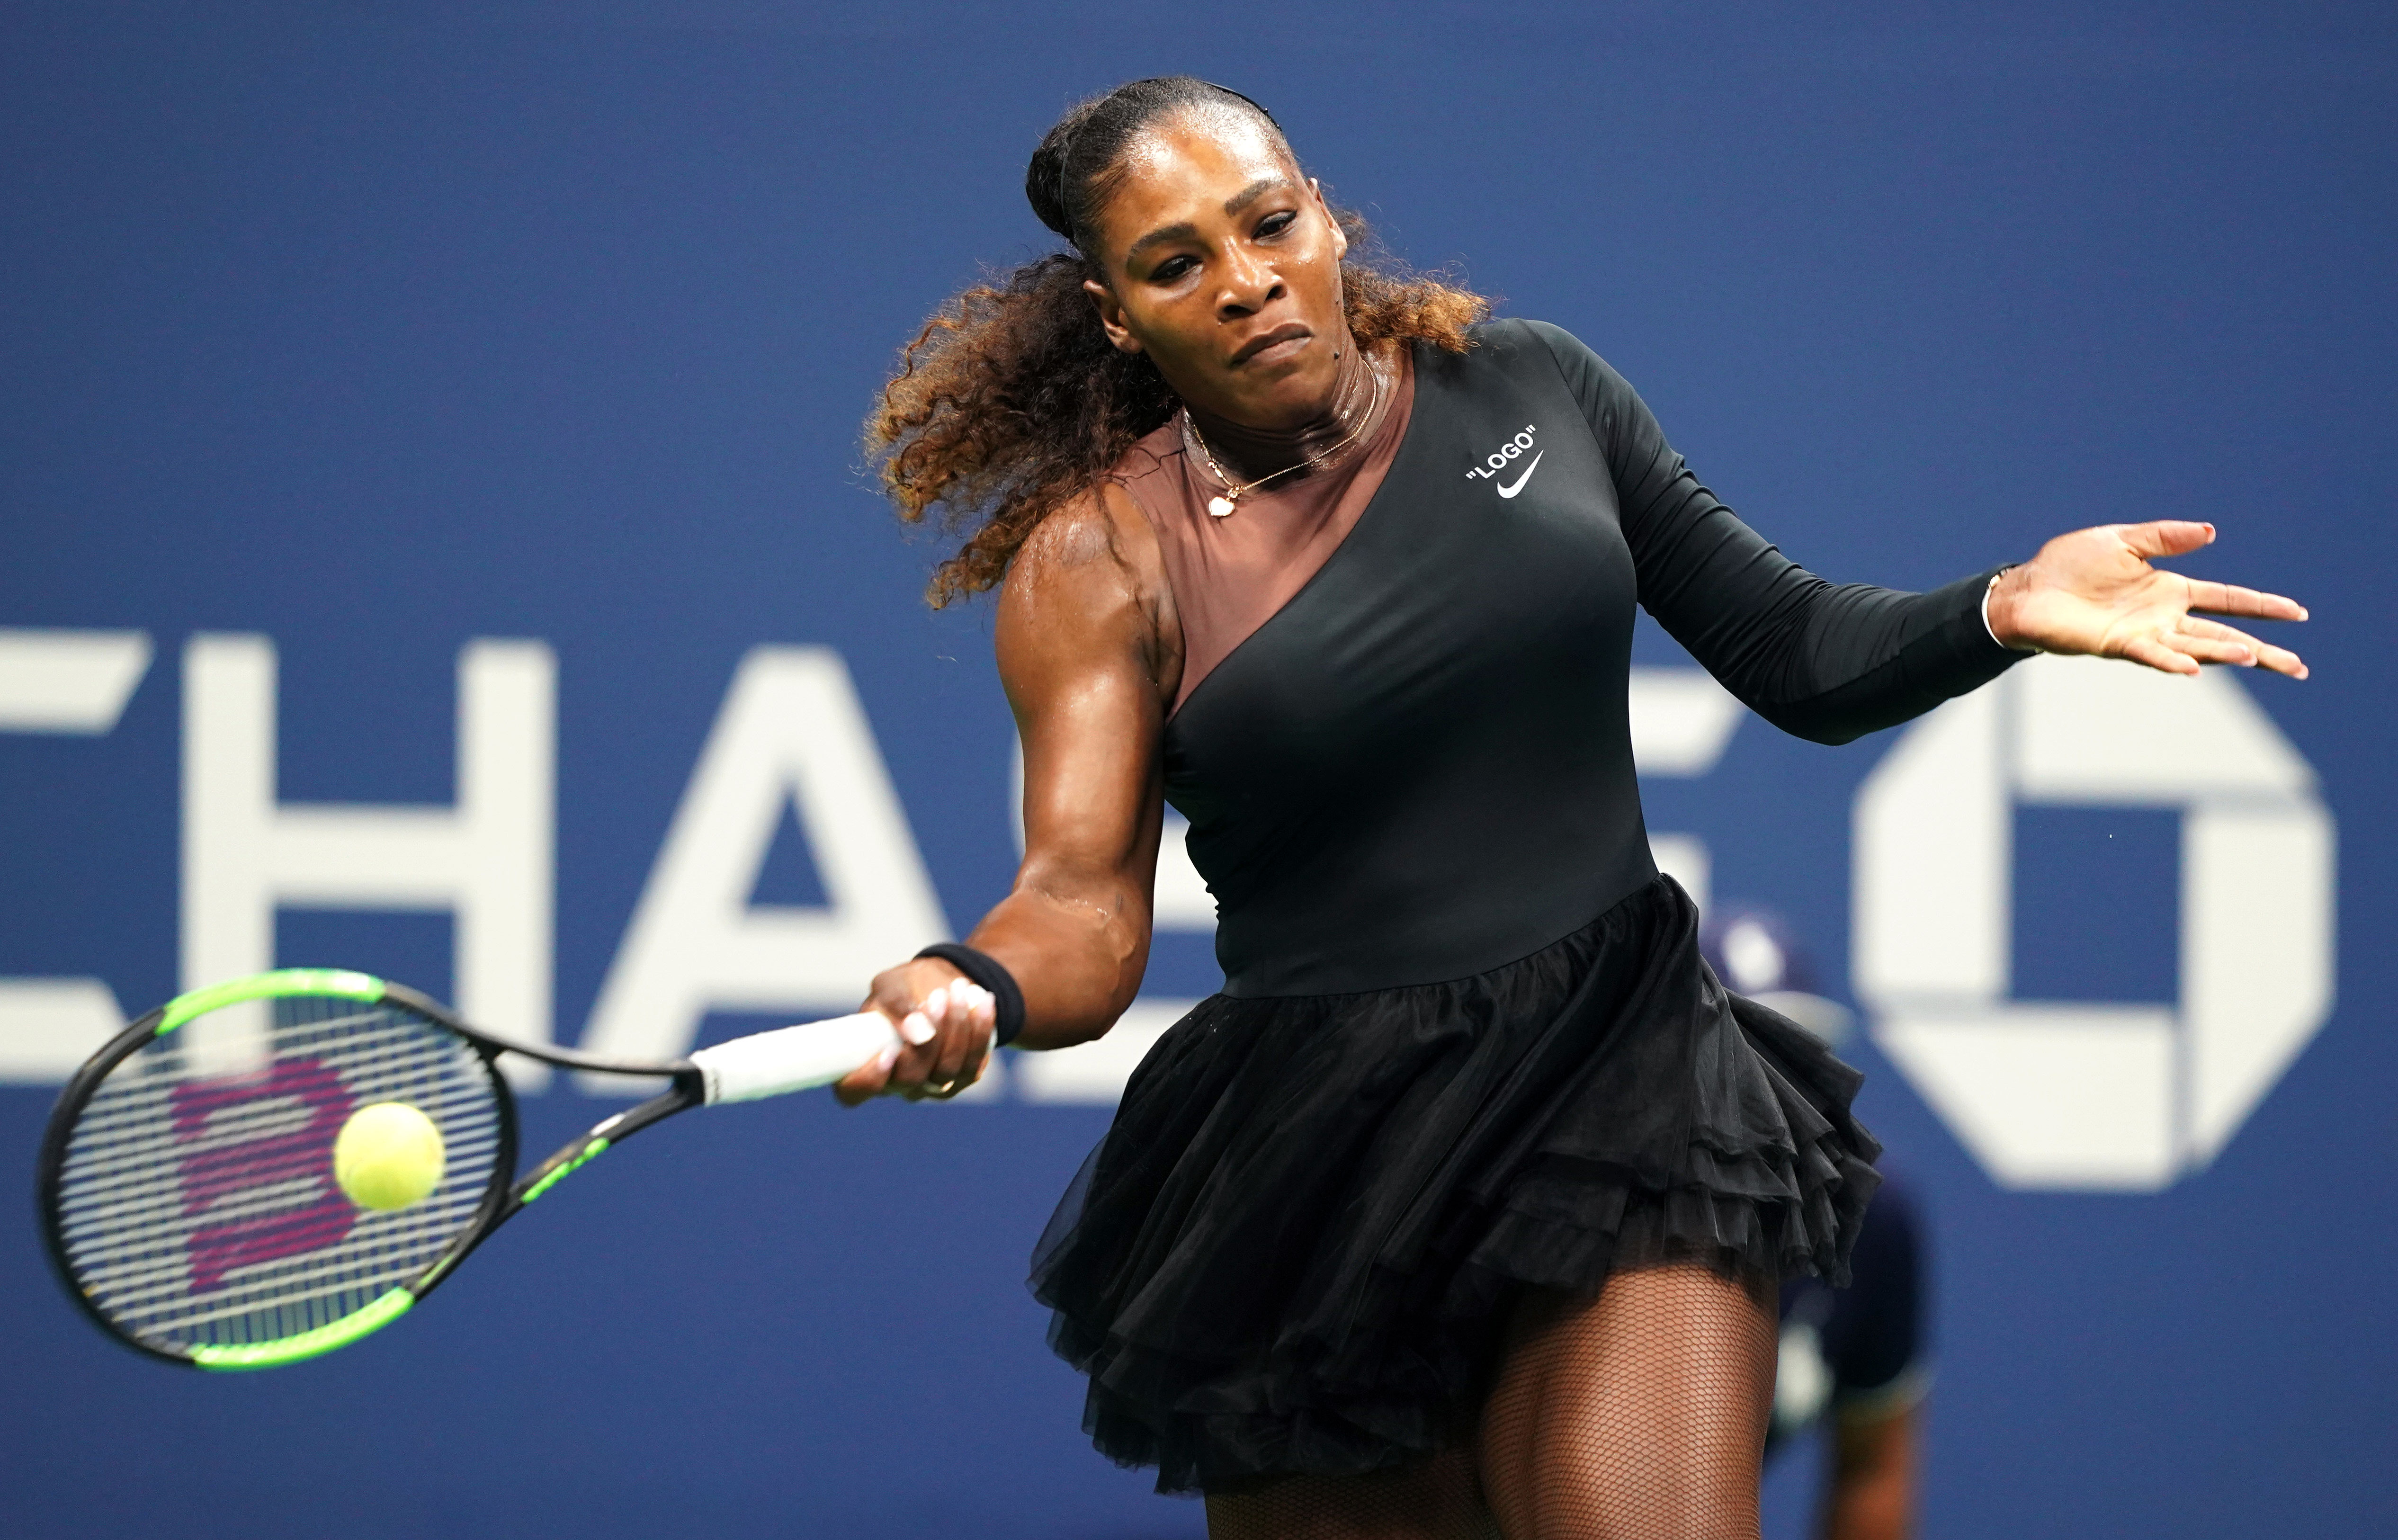 Samuel sopa Grande Serena Williams' One-Shoulder Off-White x Nike 2018 U.S. Open Dress